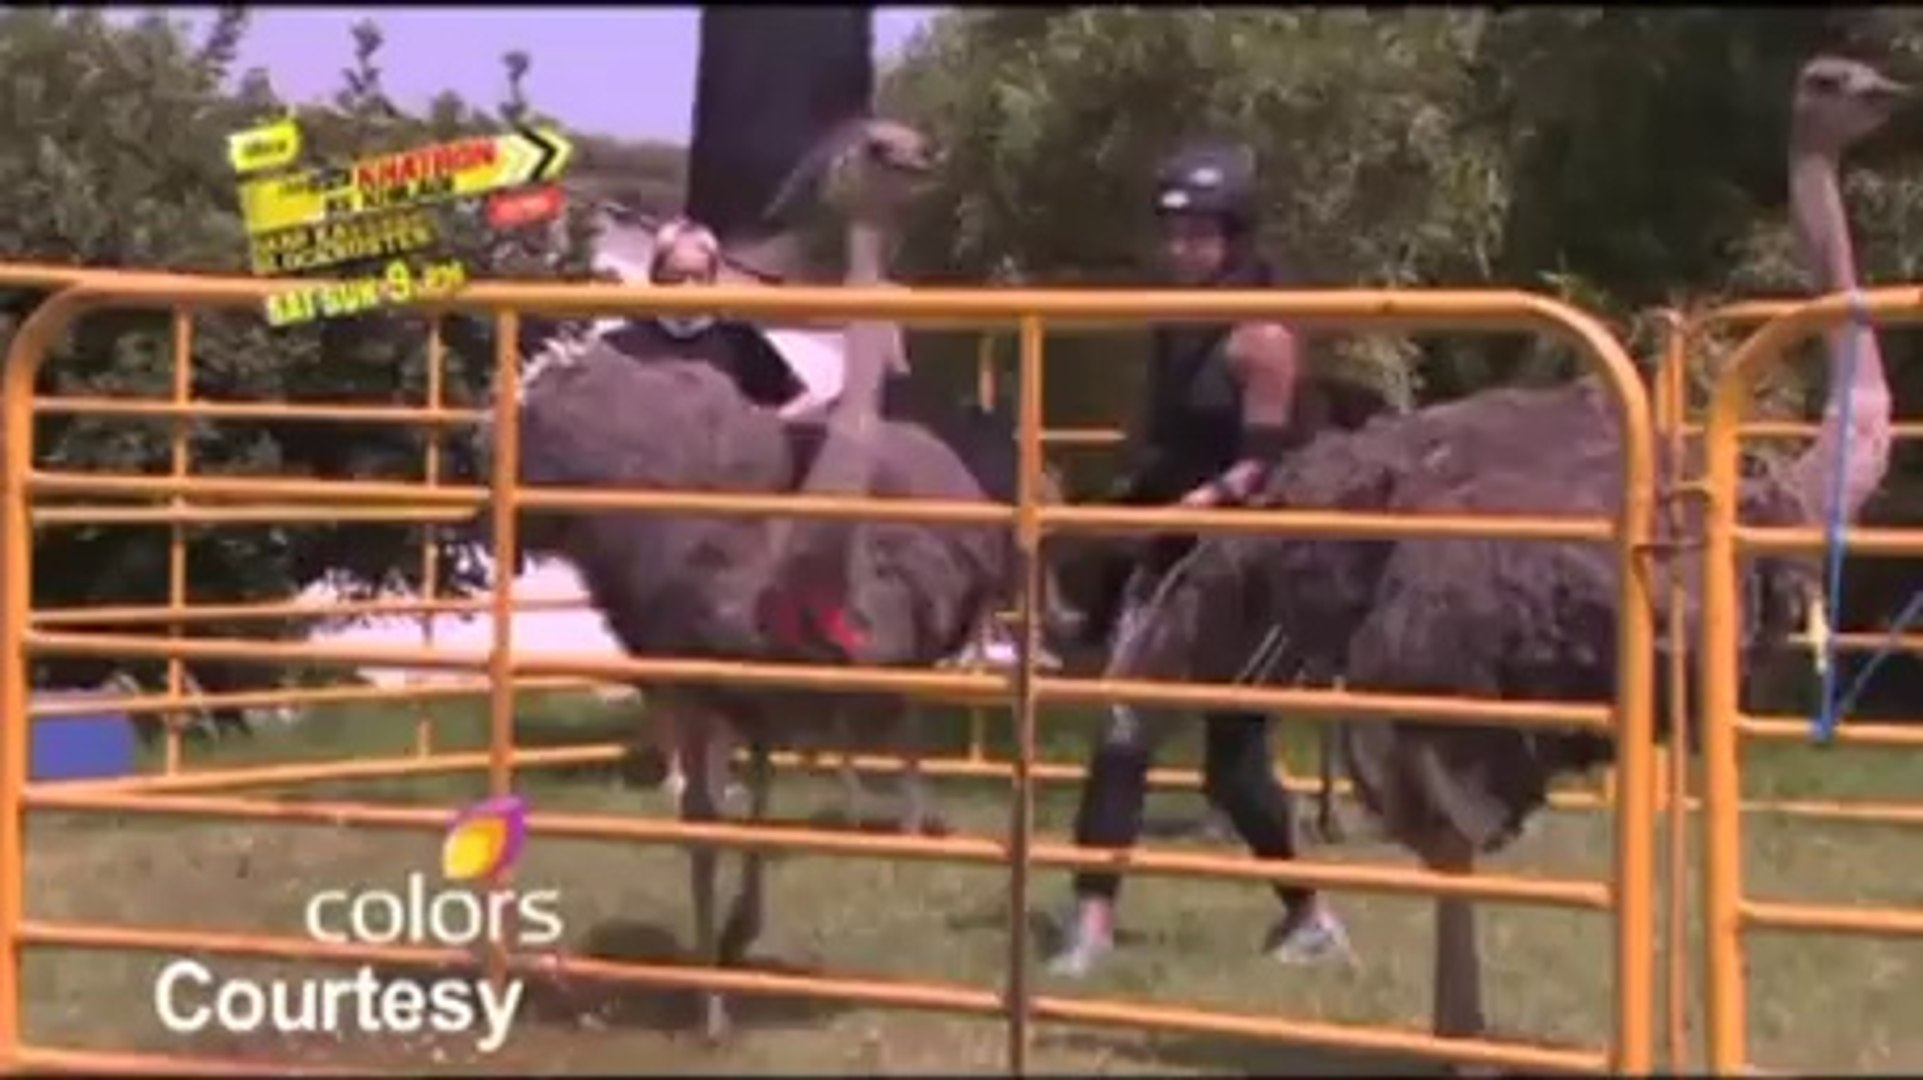 Khatron Ke Khiladi : Ostrich ride for contestants - IANS India Videos